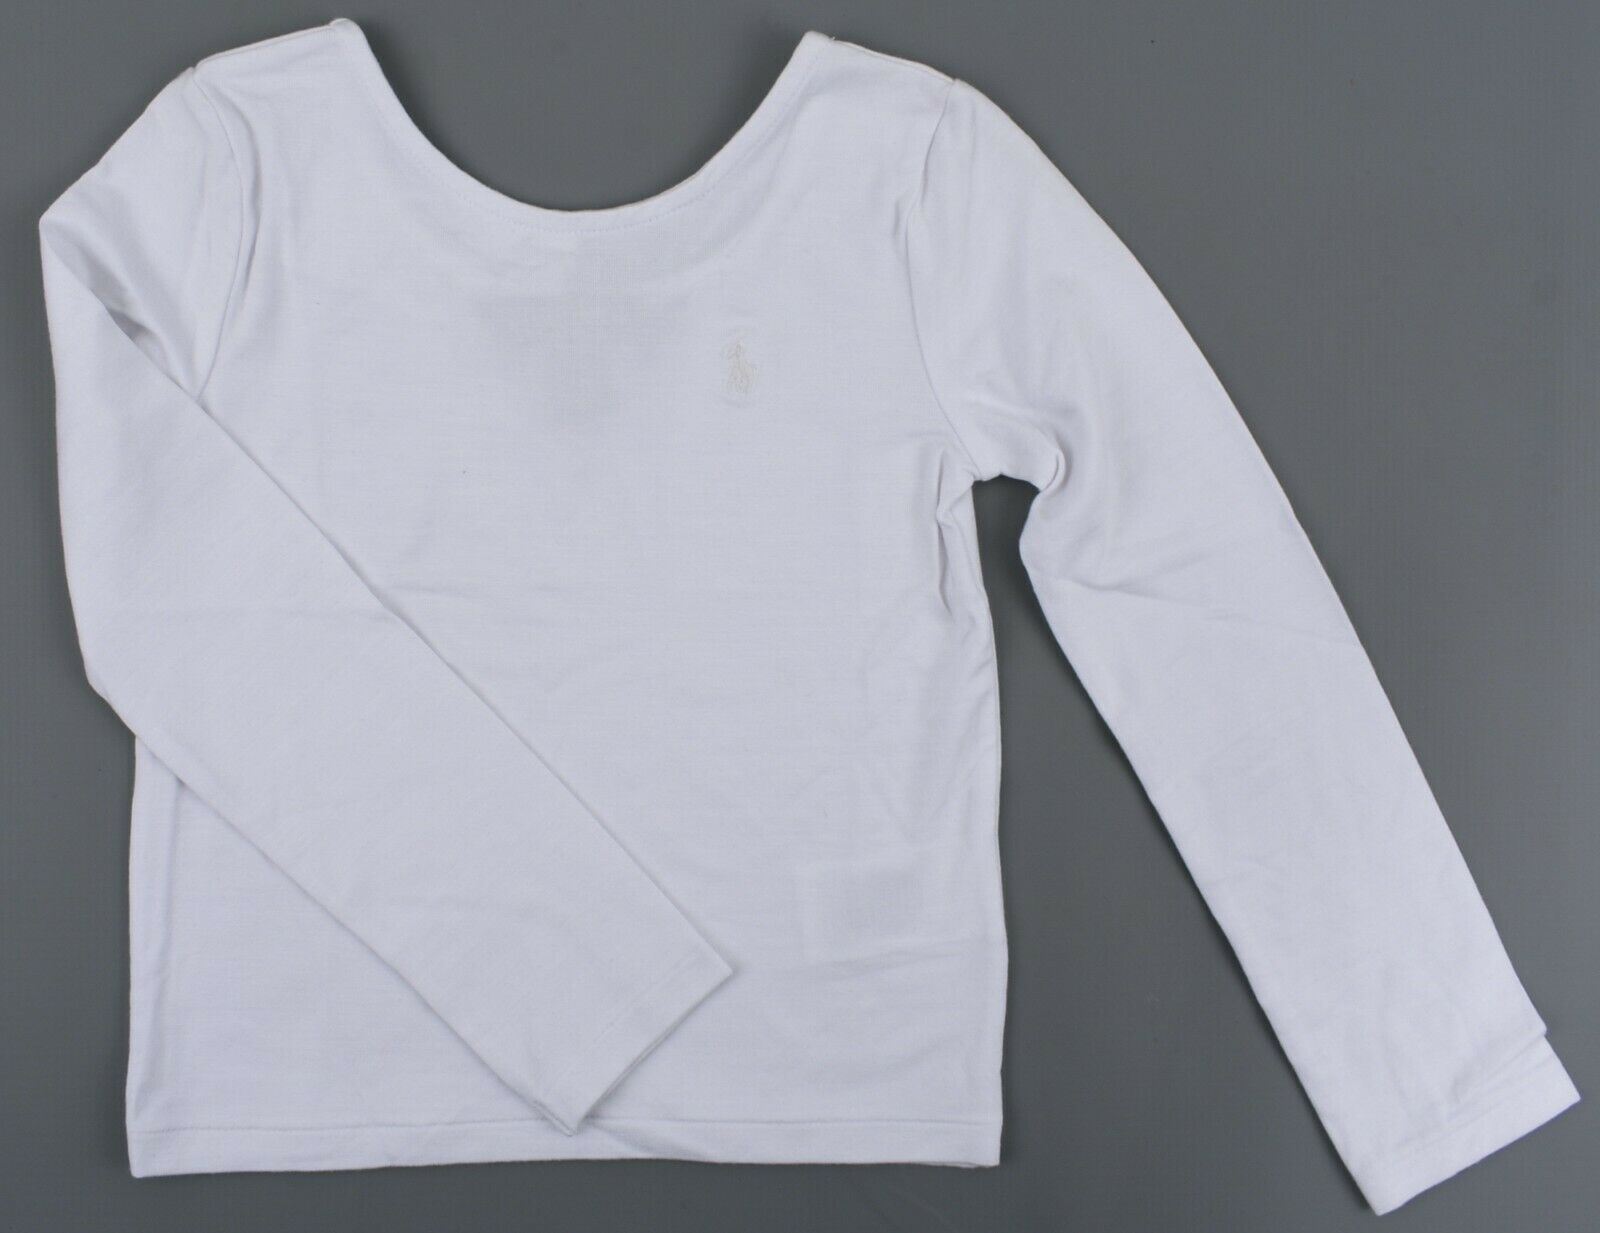 POLO RALPH LAUREN Girls' Long Sleeve Modal Top, White, size 5 years